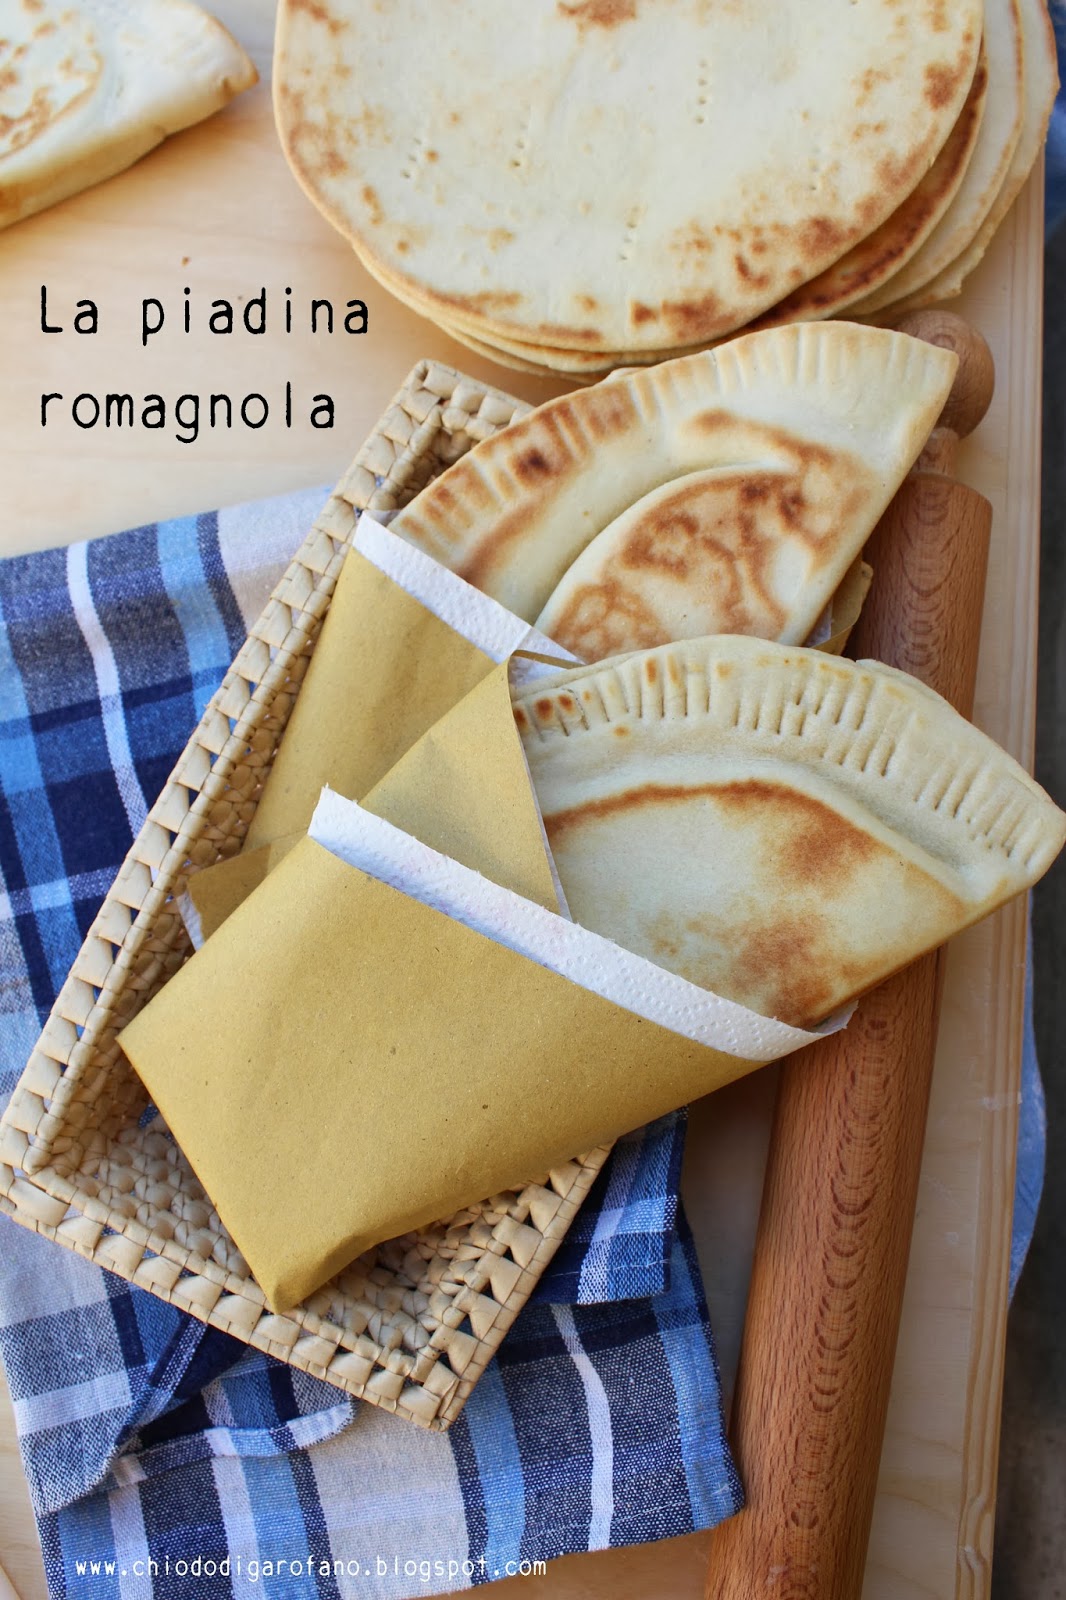 chiodo di garofano: Street FOOD lovers: la piadina romagnola